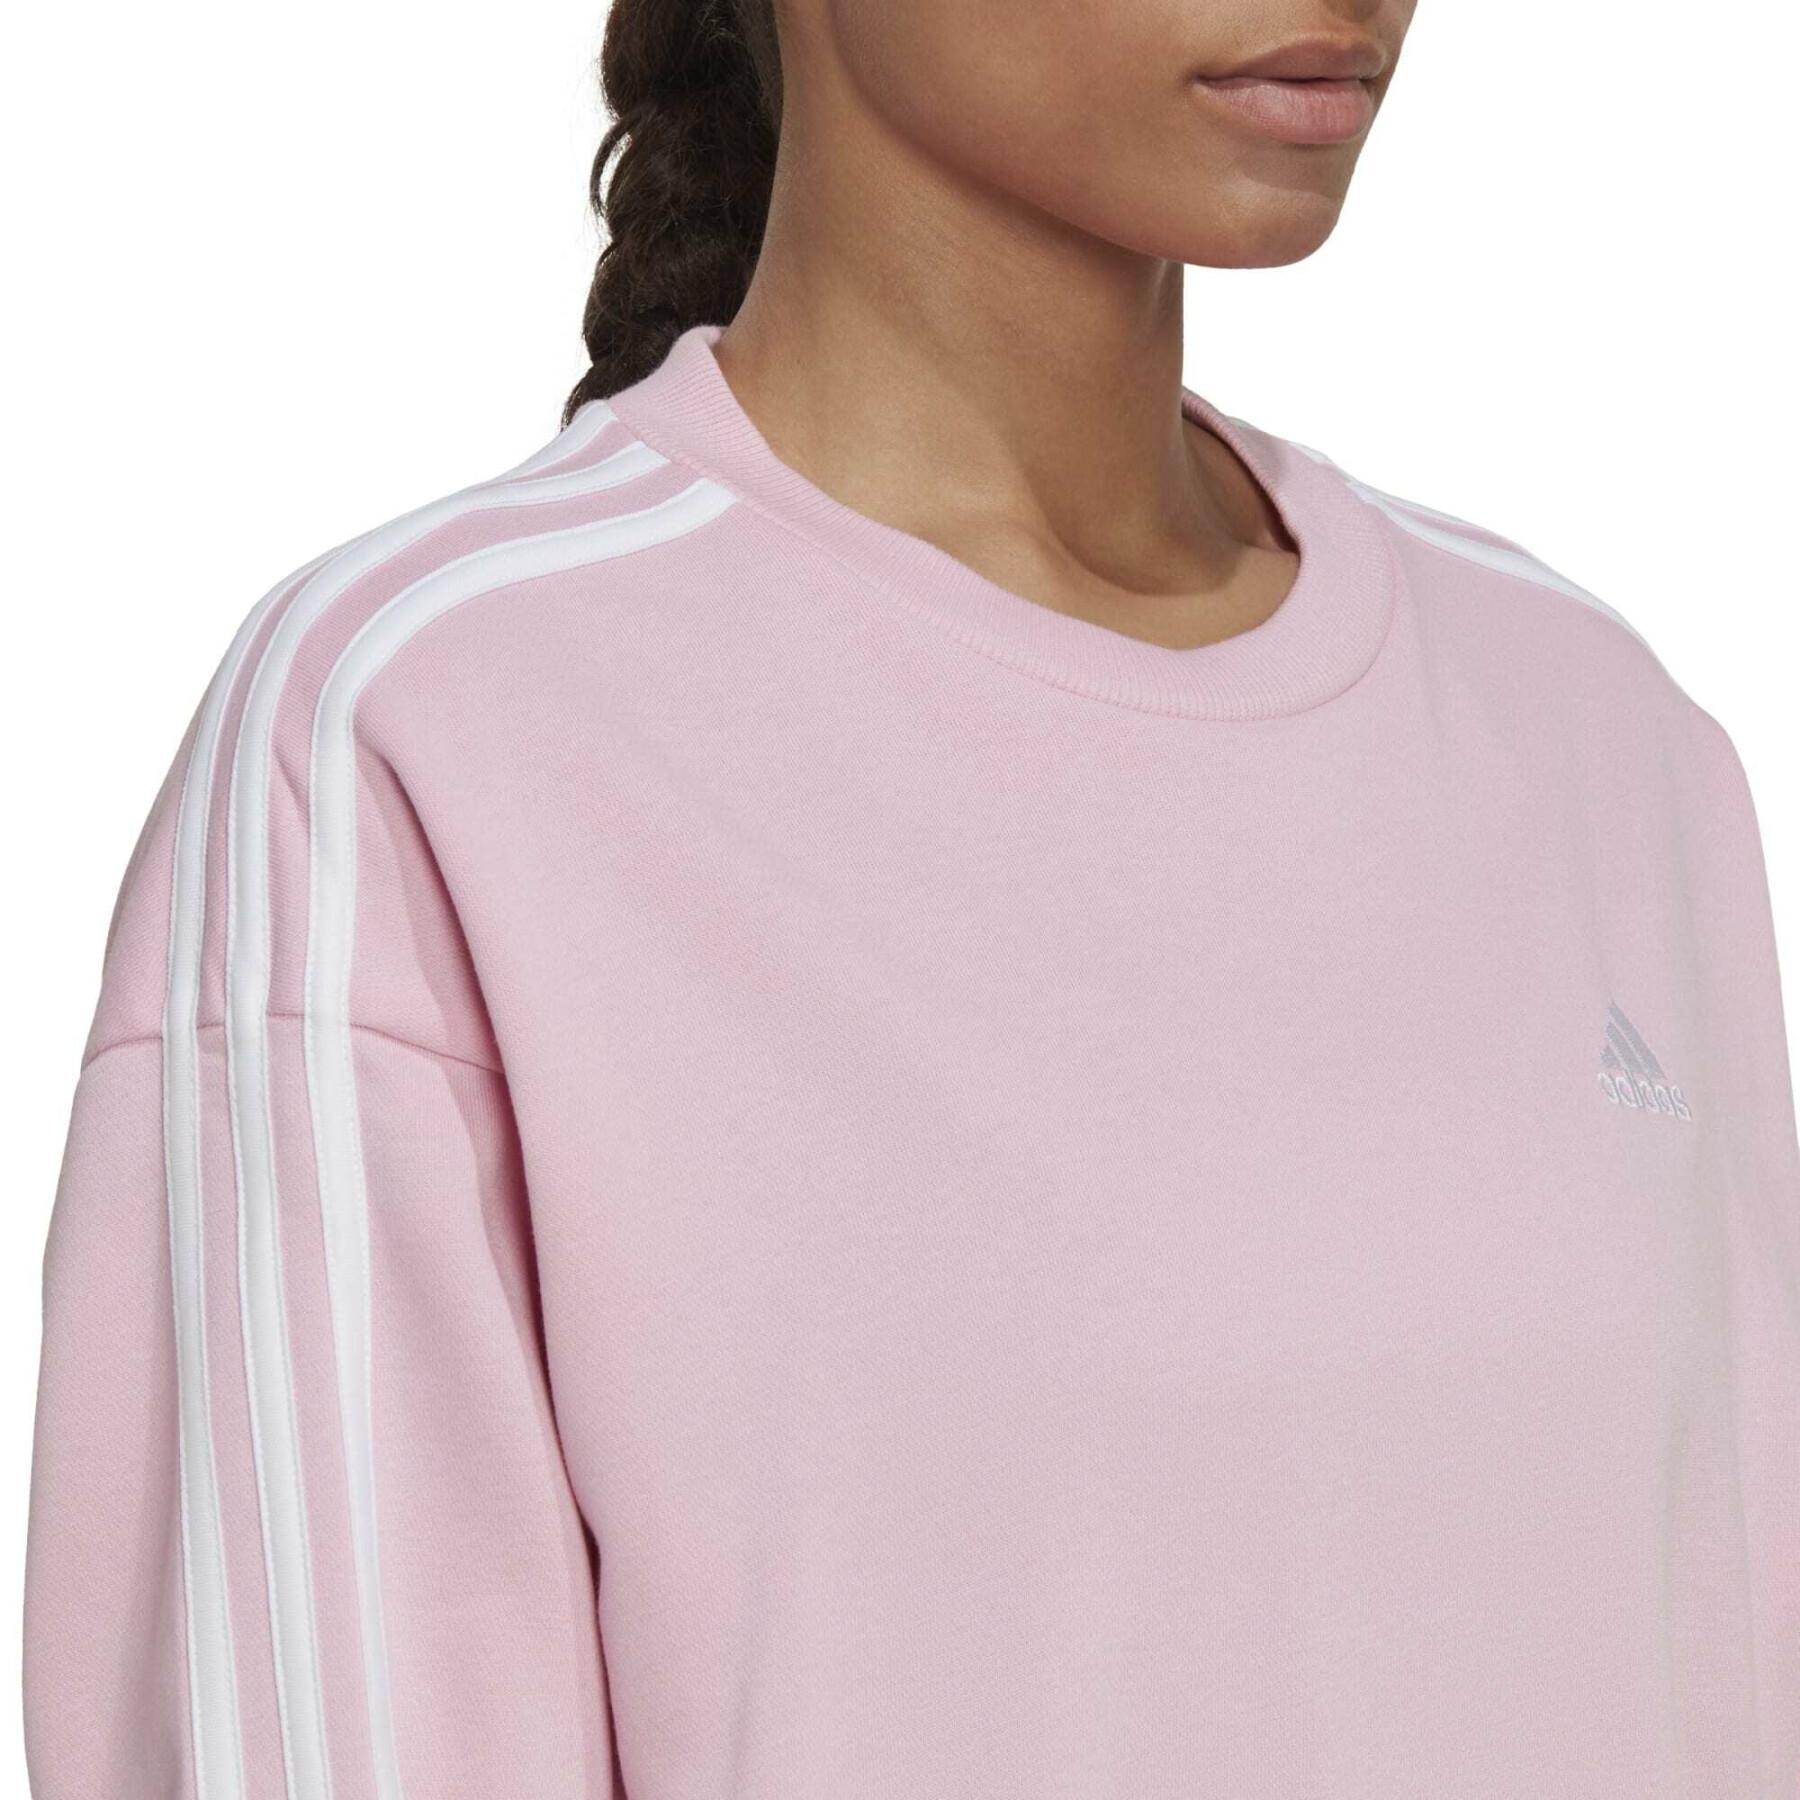 Women's 3-Stripes Sweatshirt adidas Essentials Studio Lounge